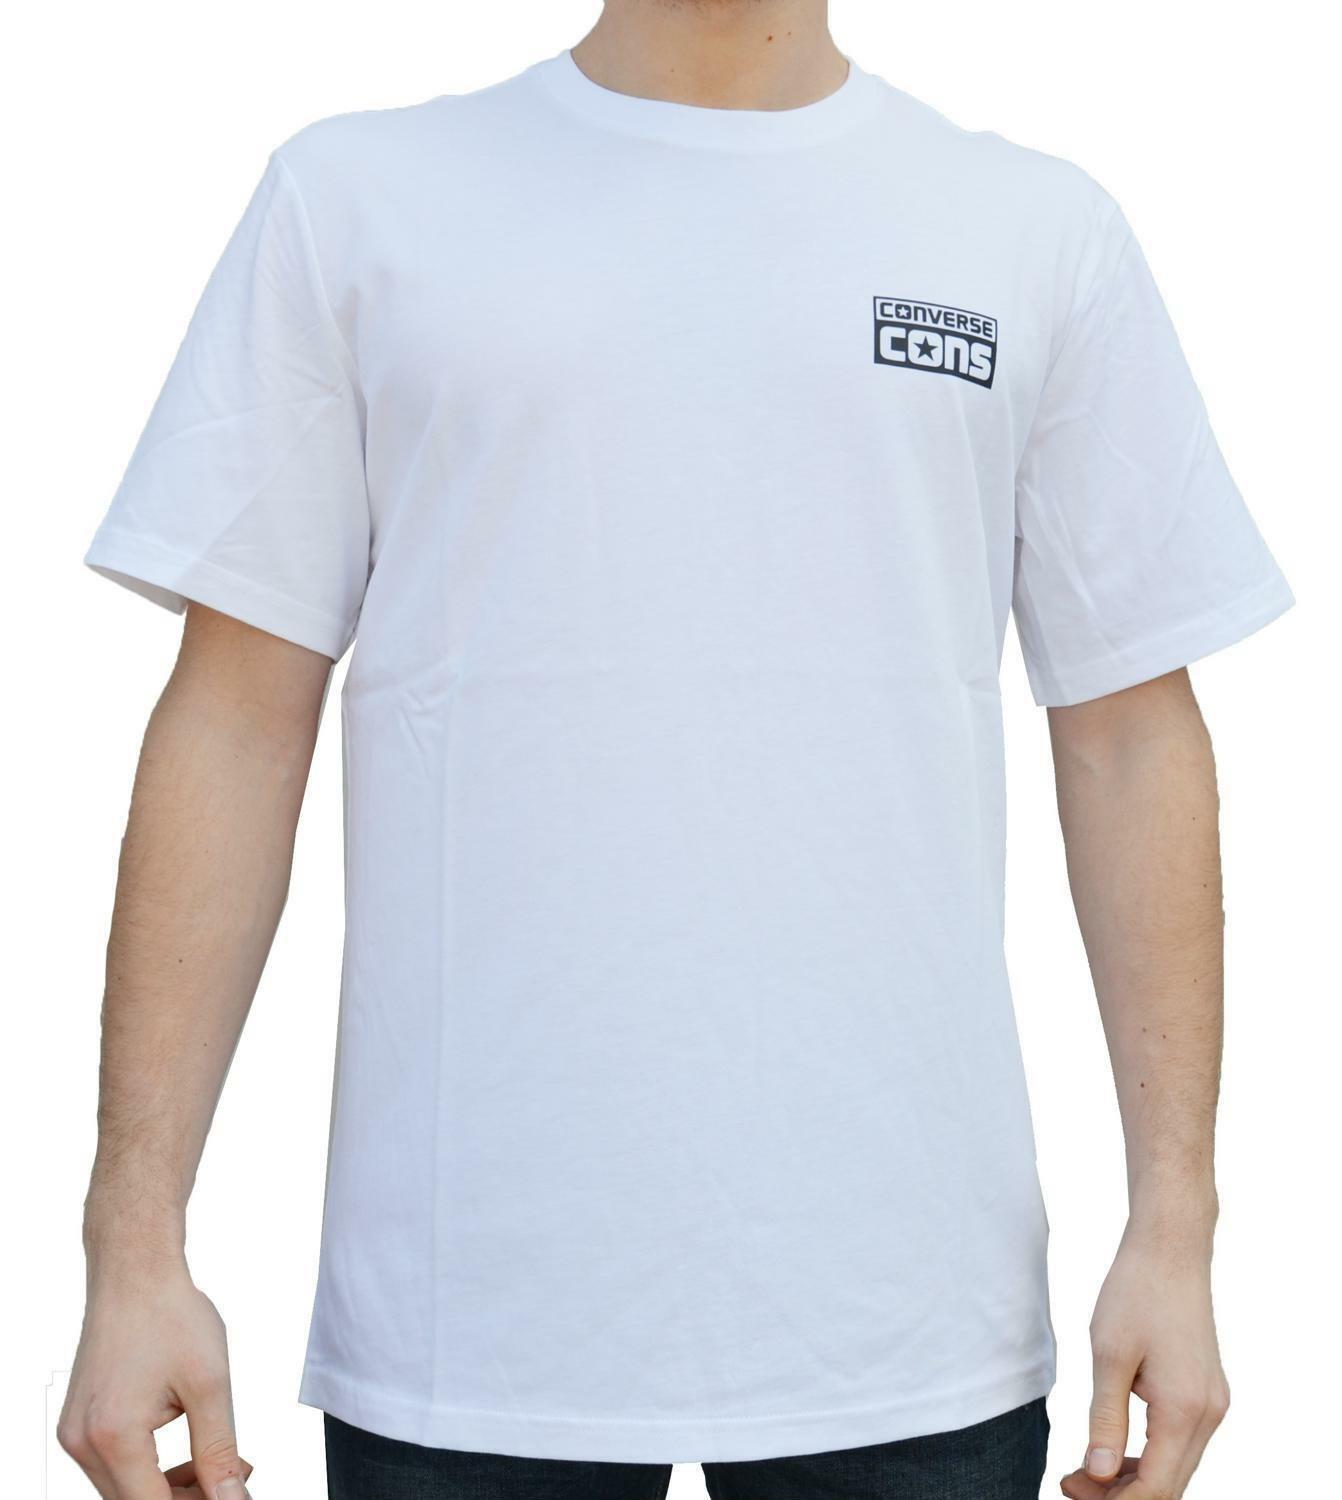 converse converse logo tee t-shirt uomo bianca 5693a02